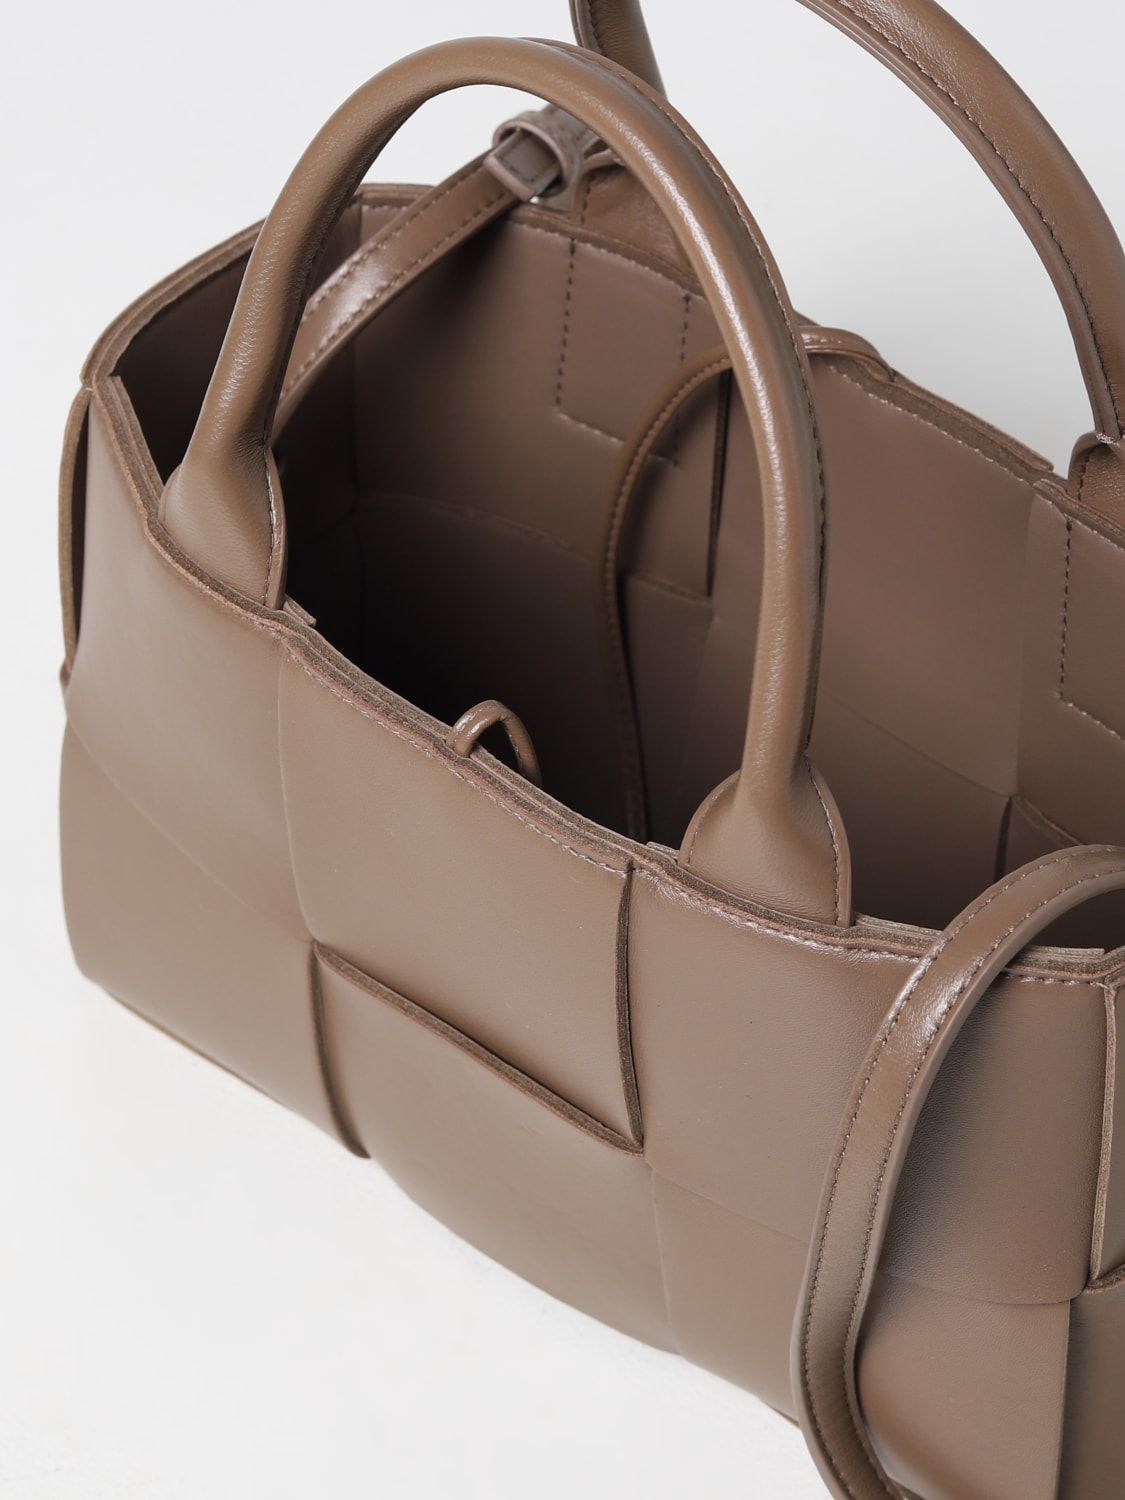 BOTTEGA VENETA, Mini Intrecciato Leather Tote Bag, Women